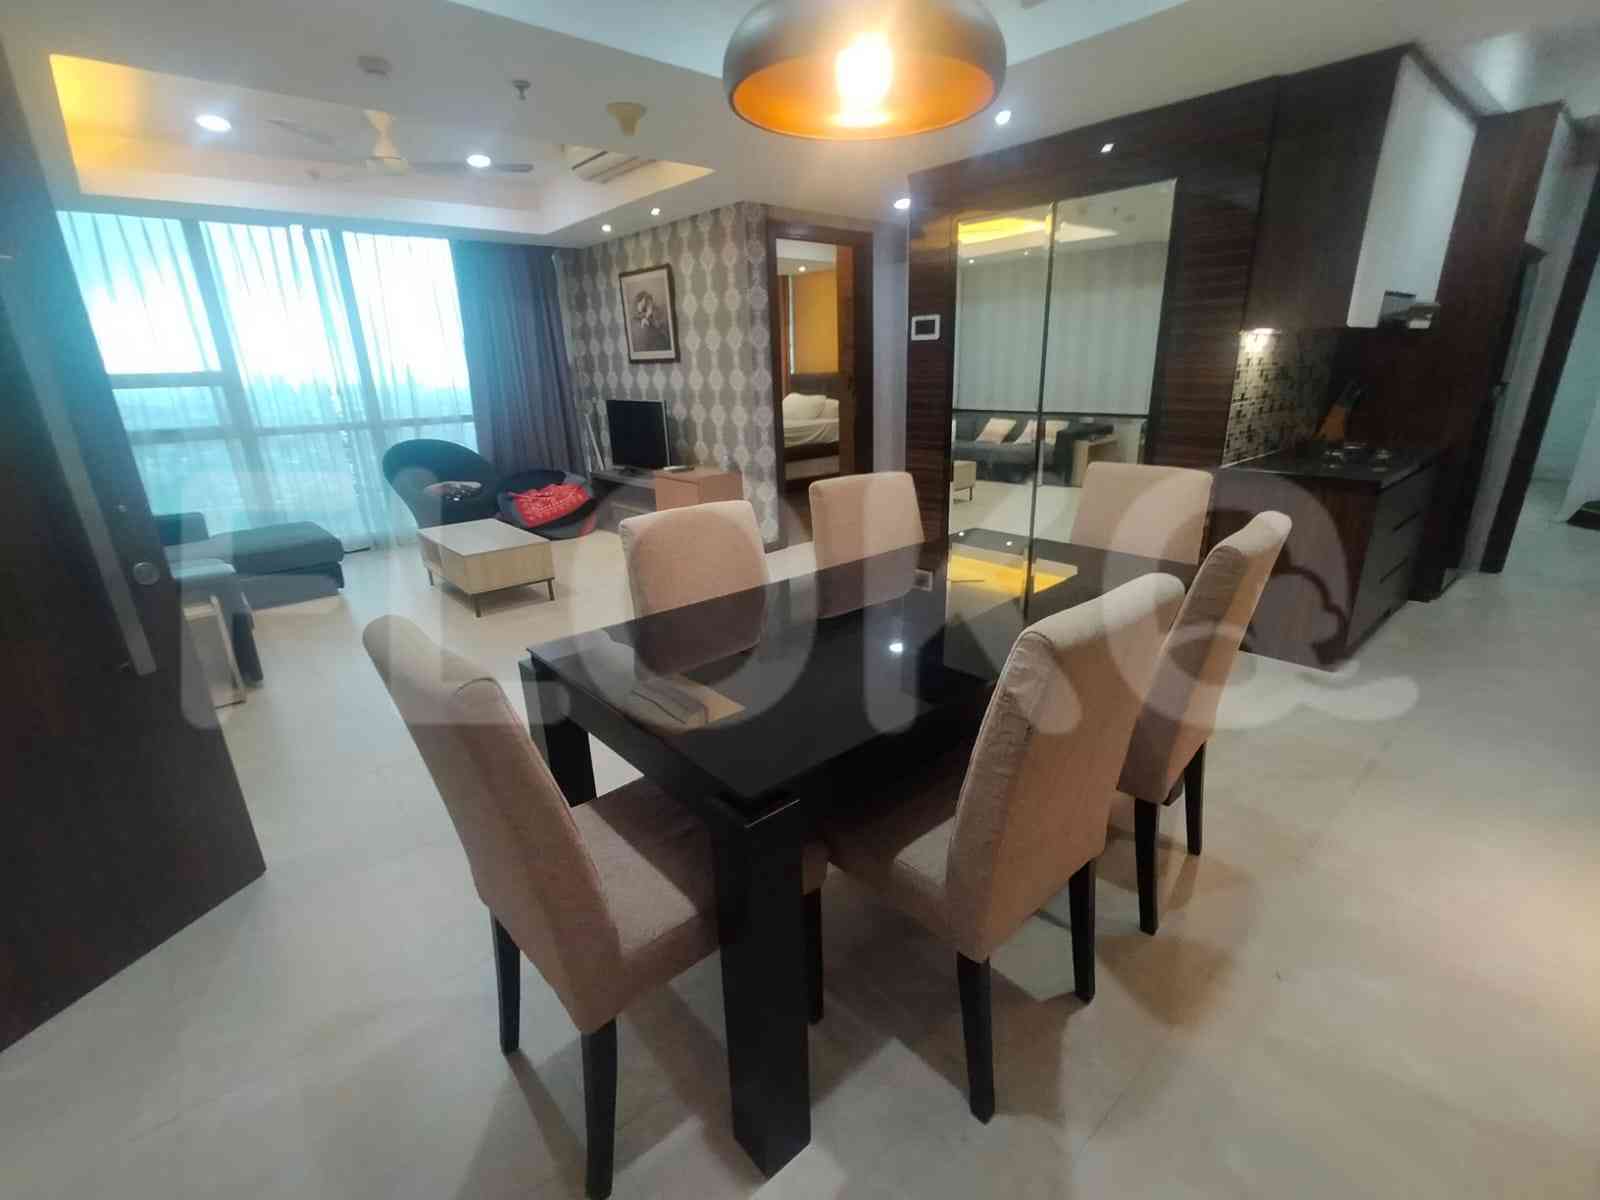 2 Bedroom on 25th Floor for Rent in Kemang Village Residence - fkea49 2